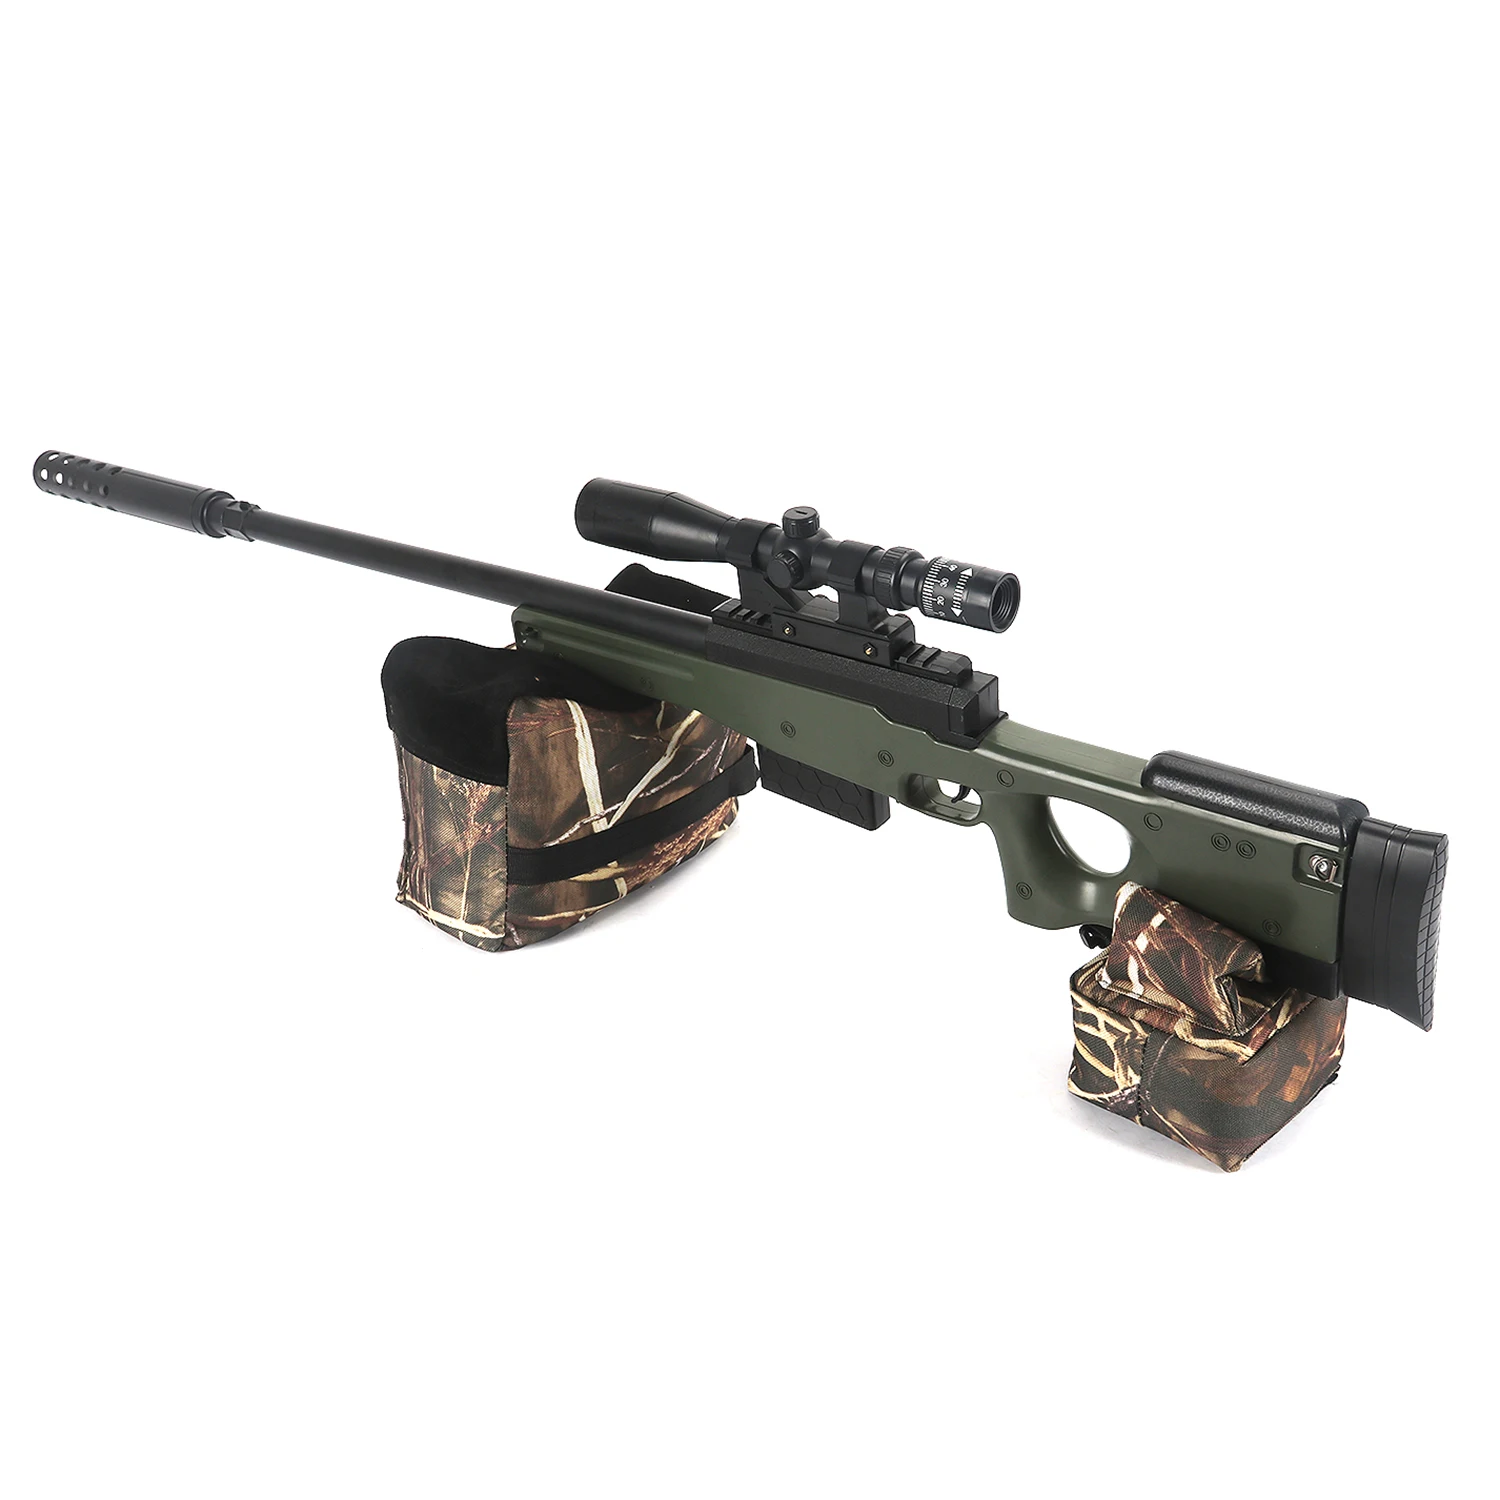 Gun Rest Rifle Bag Front Rear Bench Sand Tourbon Ammo Hold Cheek Pad Hunting Set 